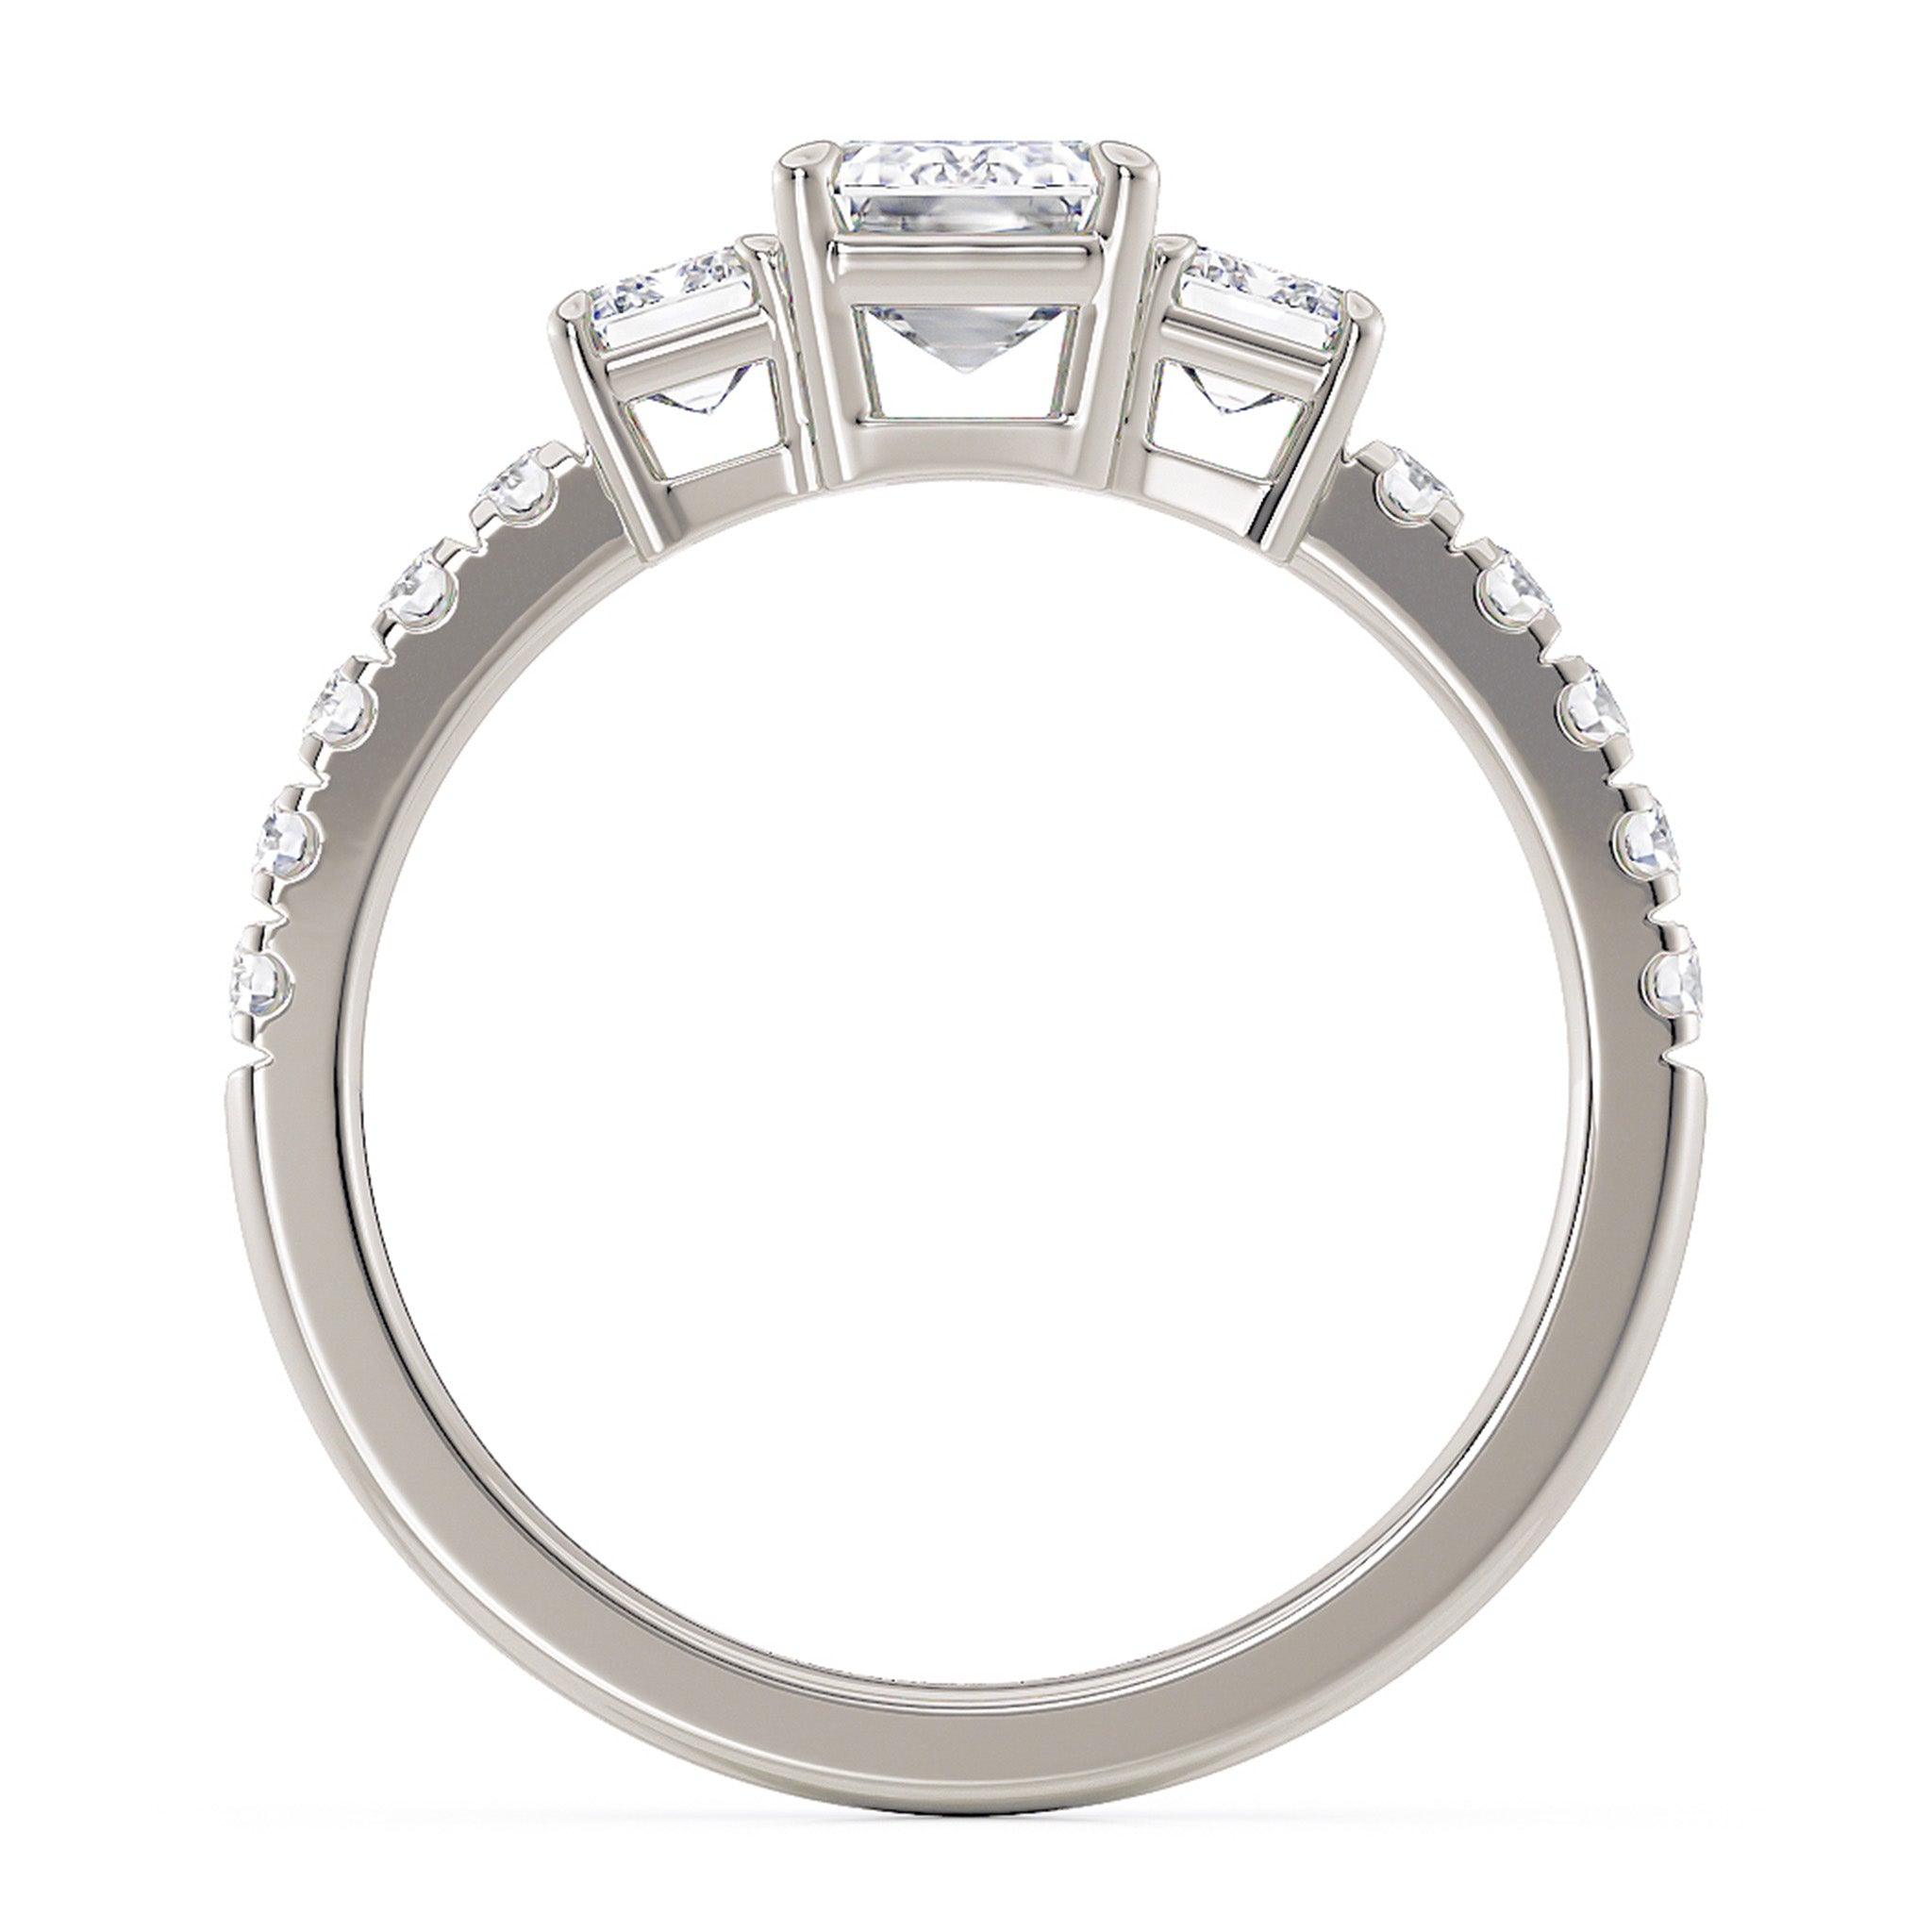 Aspen Emerald Cut Diamond Trilogy Ring with Diamonds on the Band - Monroe Yorke Diamonds